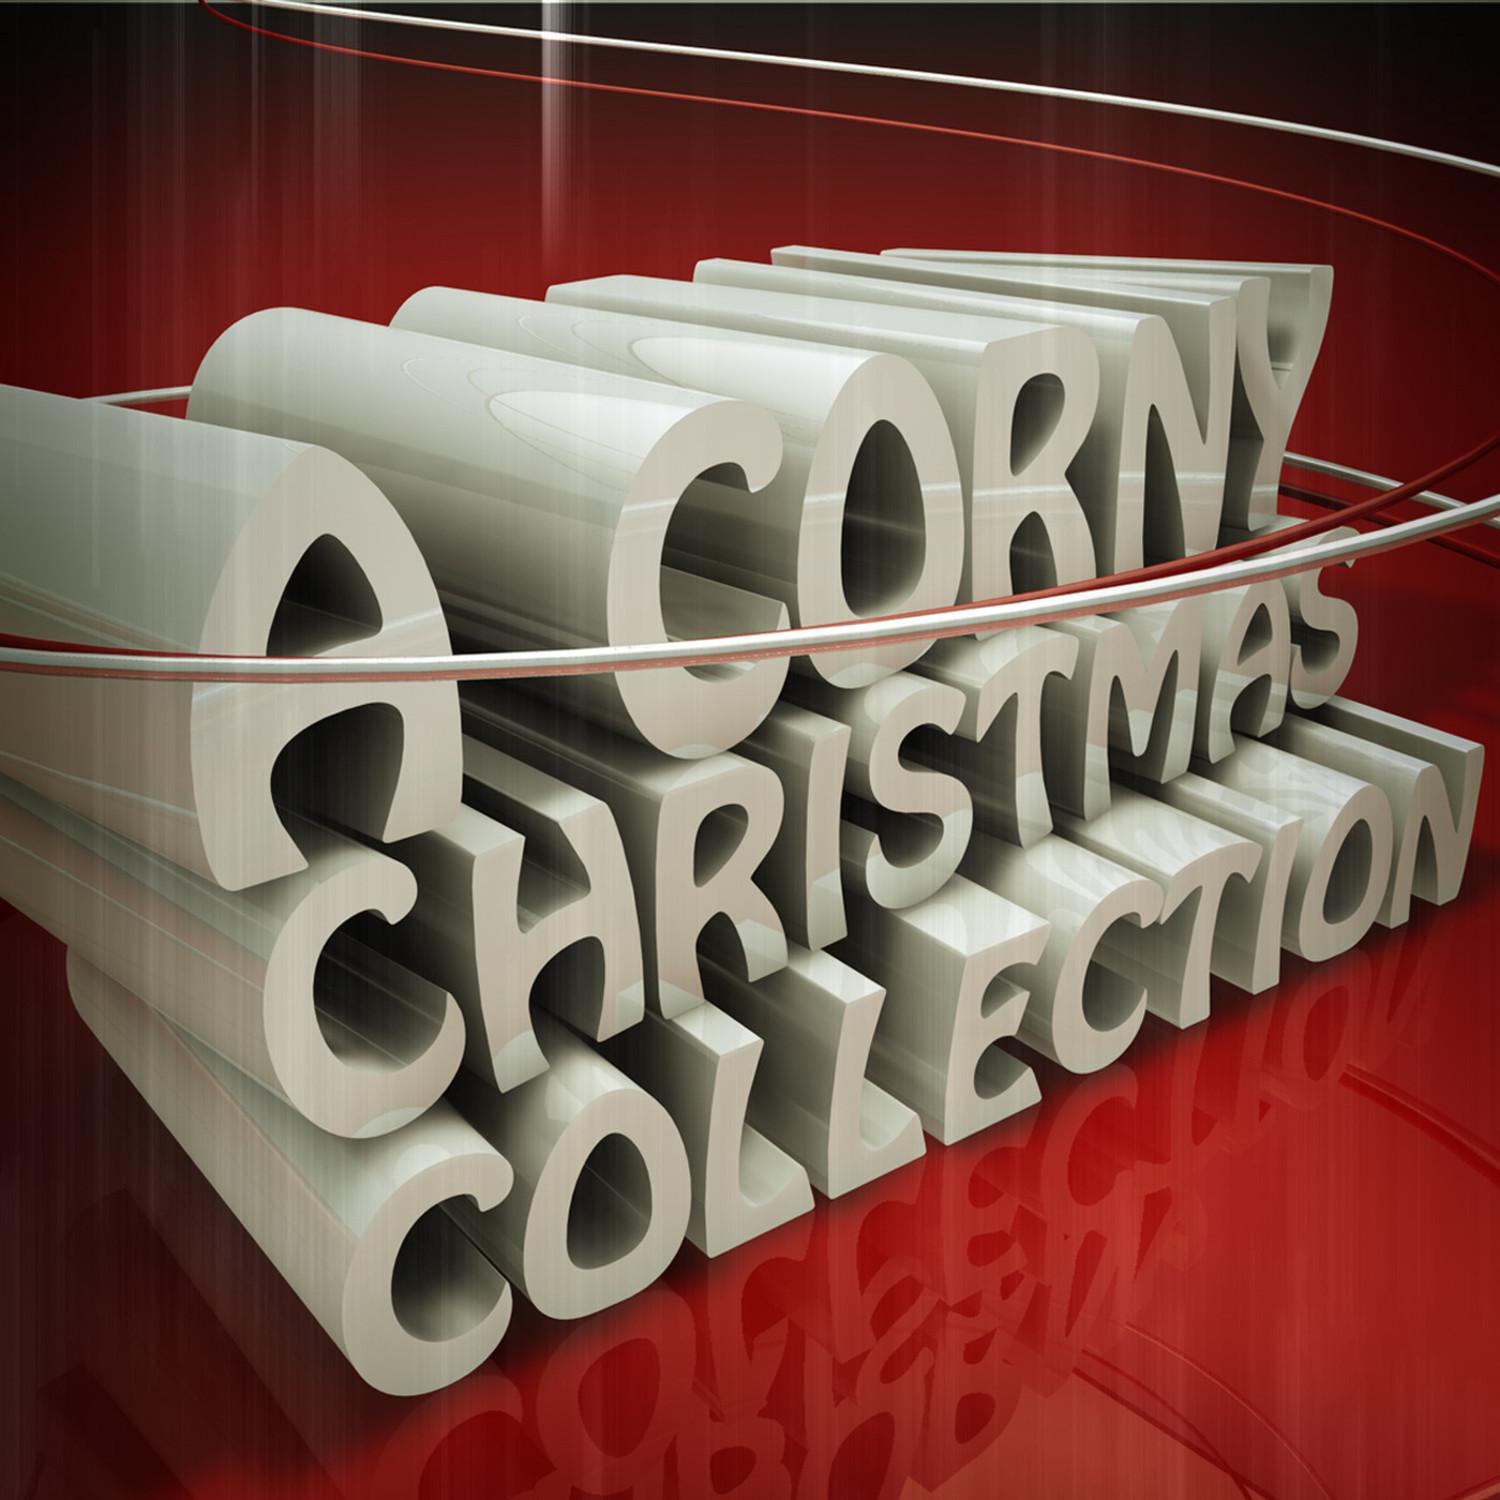 A Corny Christmas Collection